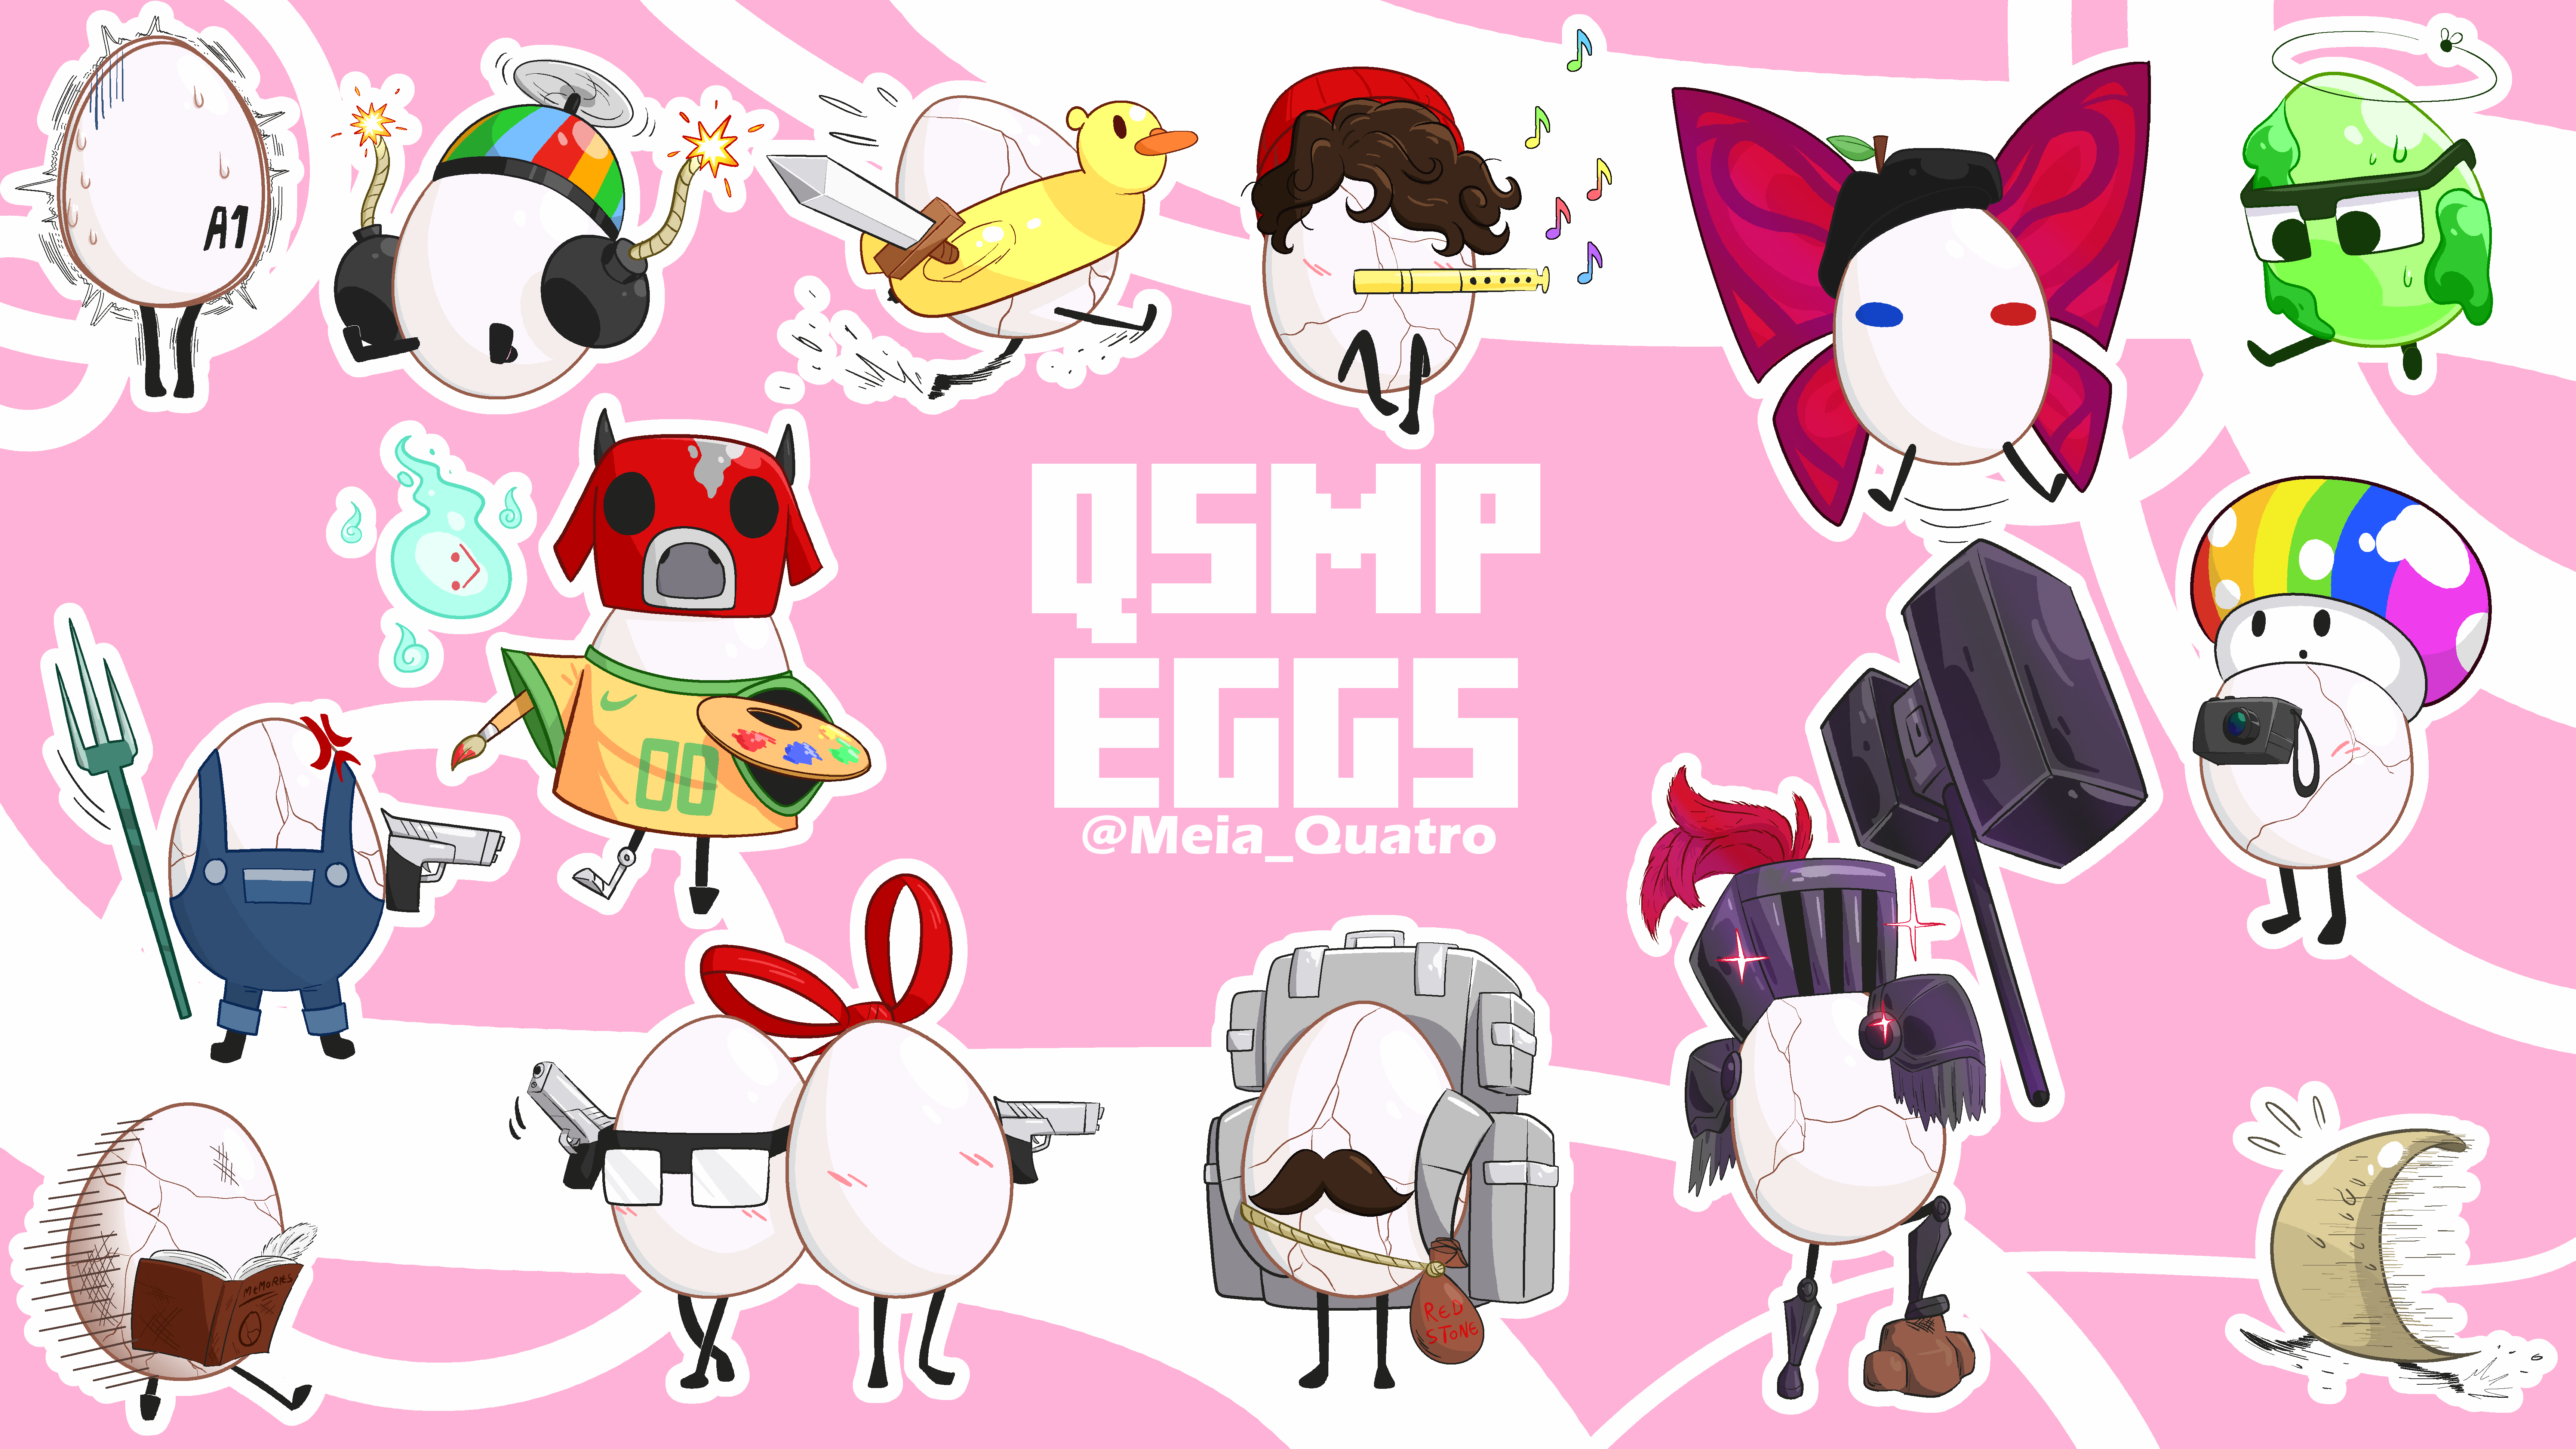 Eggs Qsmp by OMeiaQuatro on DeviantArt